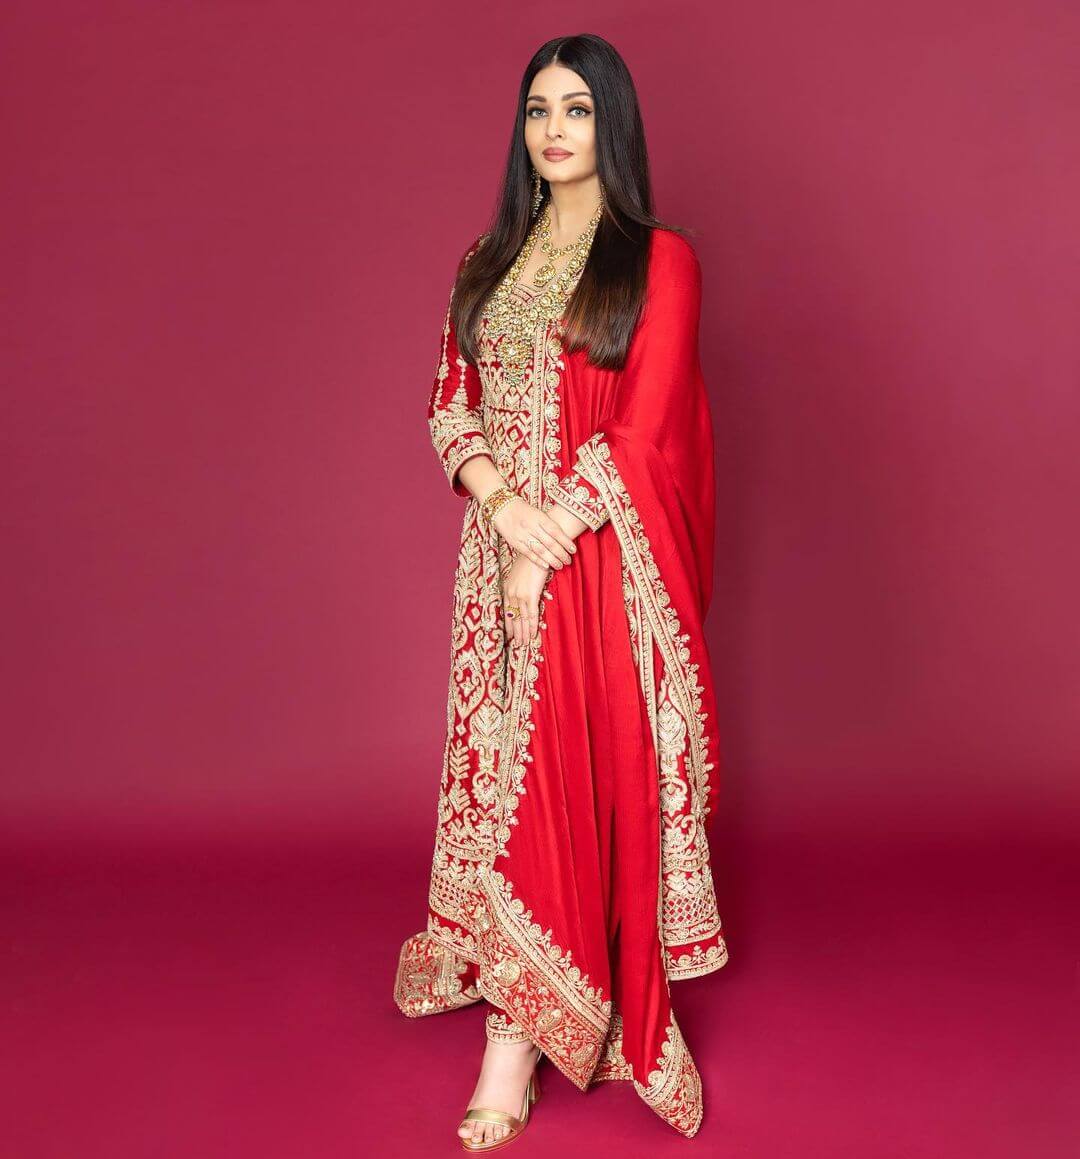 Aishwarya Rai Bachchan-Approved Karwa Chauth Looks - K4 Fashion